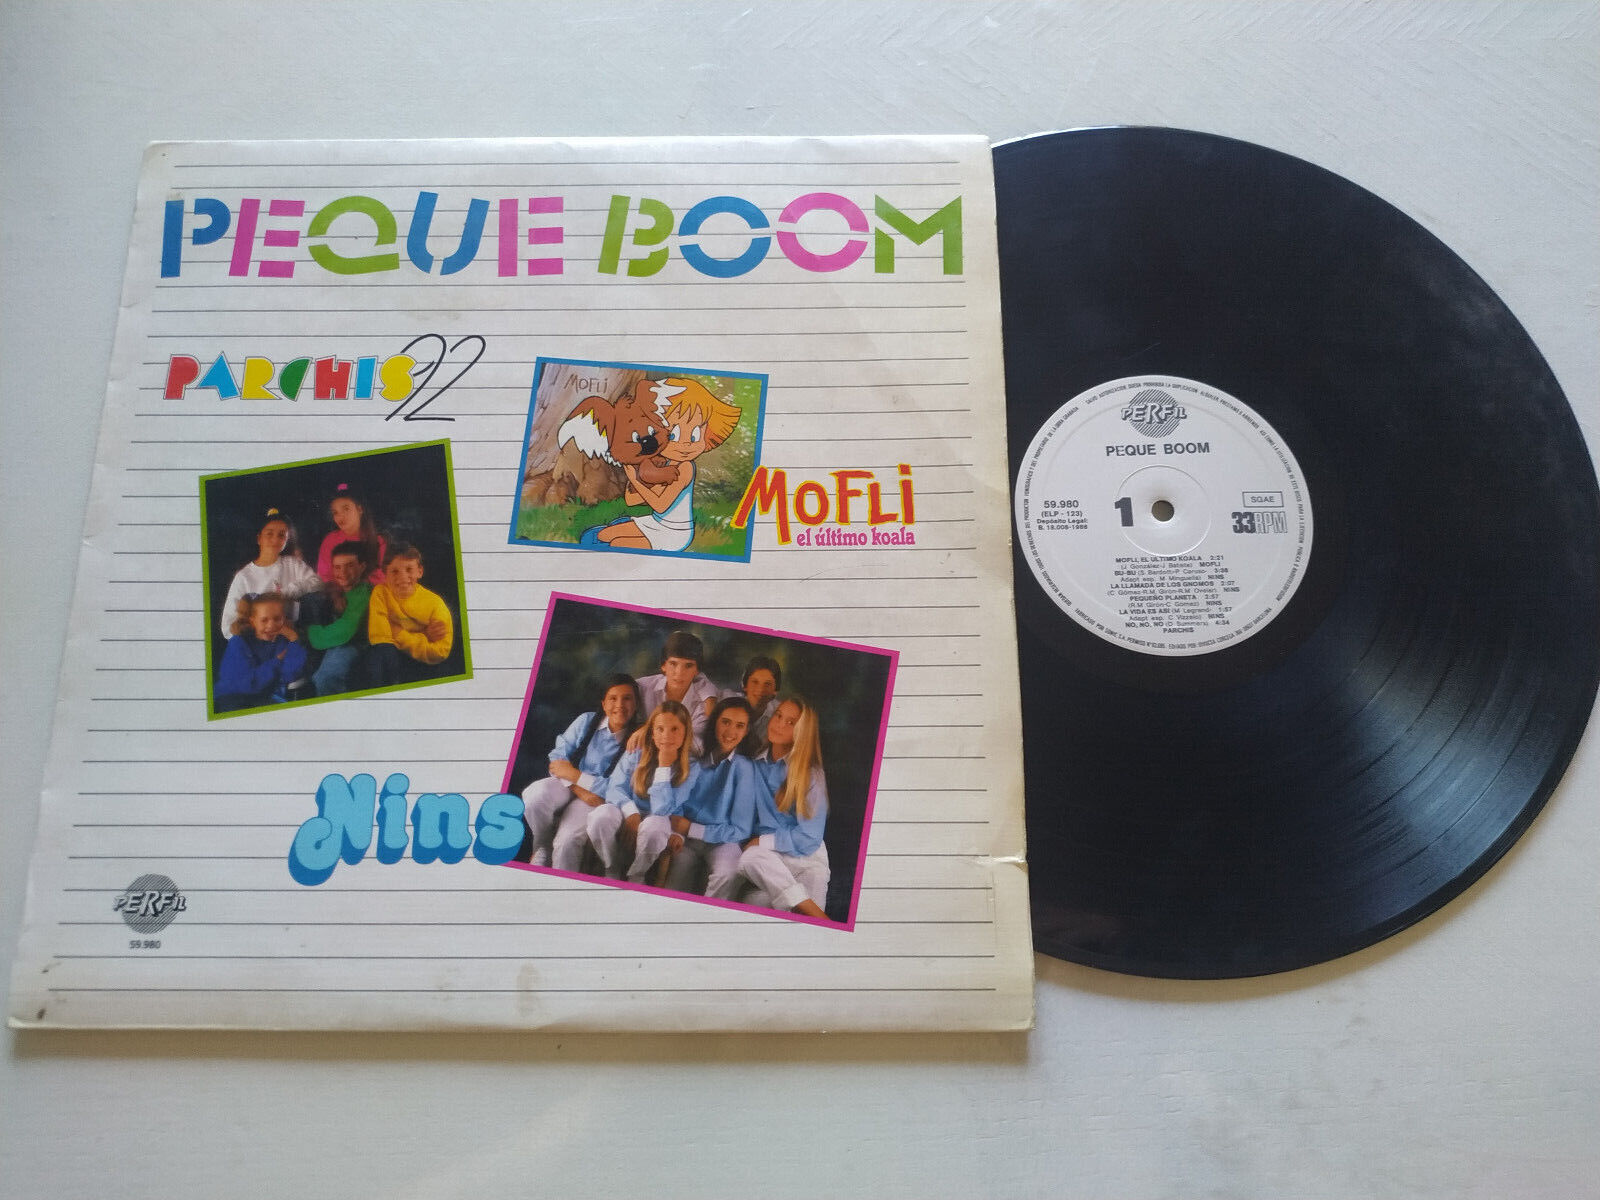 Peque Boom Parchis Nins Mofli Ultimo Koala 1988 - LP Vinilo 12